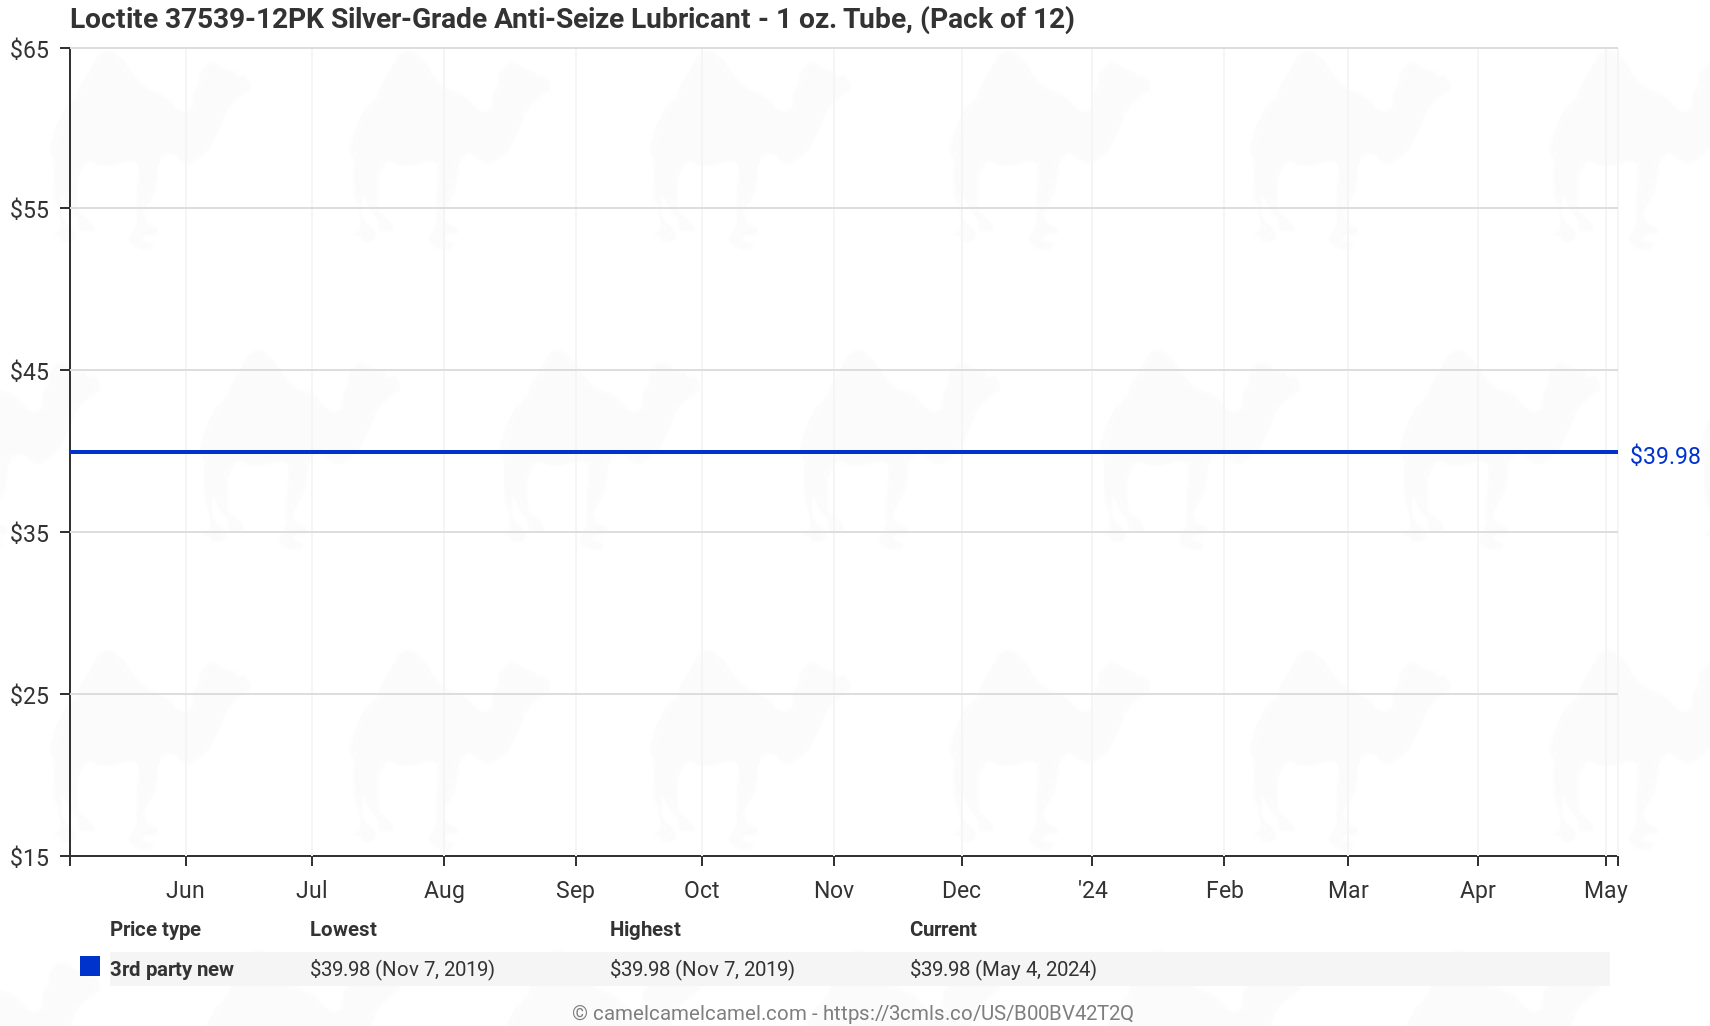 Loctite 37539-12PK Silver-Grade Anti-Seize Lubricant - 1 oz. Tube, (Pack of 12) - Price History: B00BV42T2Q